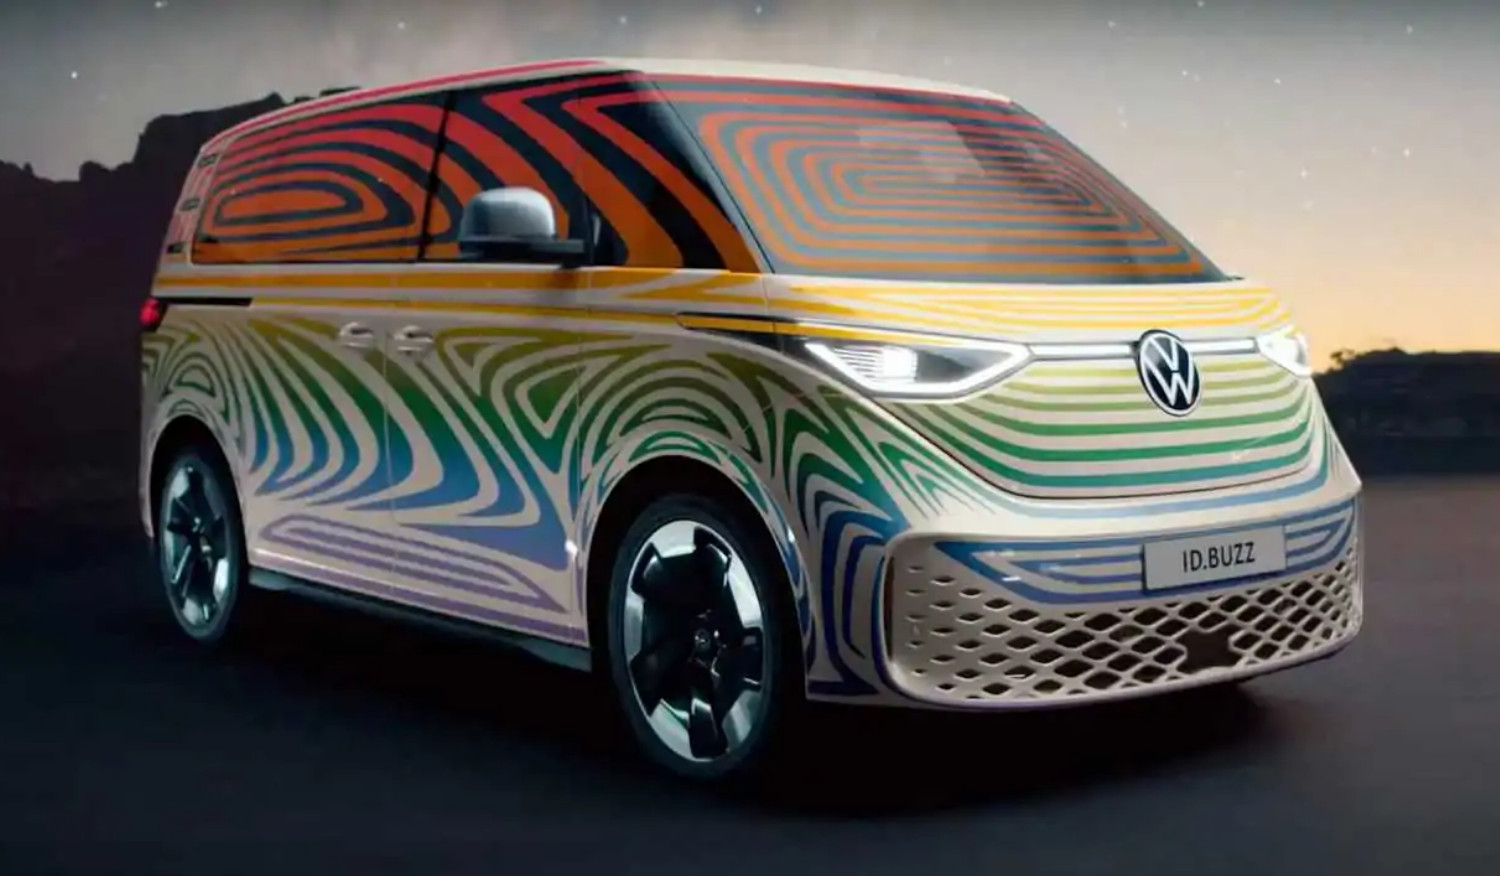 O teaser agora divulgado mostra novas imagens do futuro Volkswagen ID.Buzz